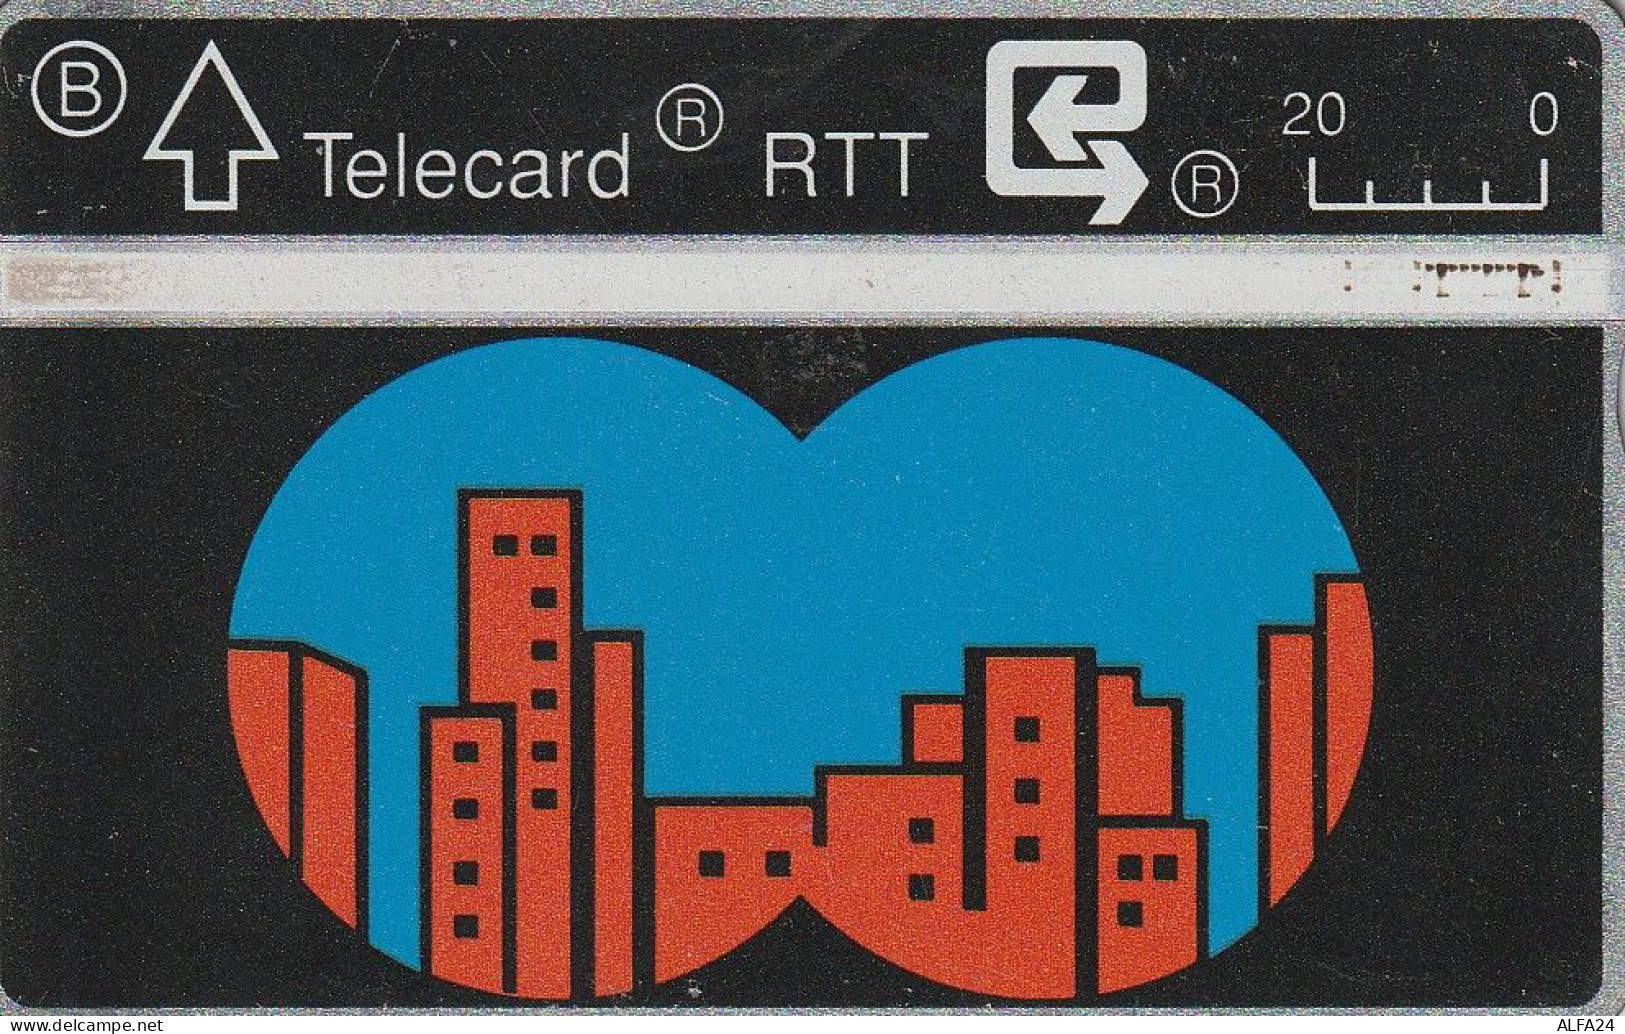 PHONE CARD BELGIO LG (CV6663 - Senza Chip